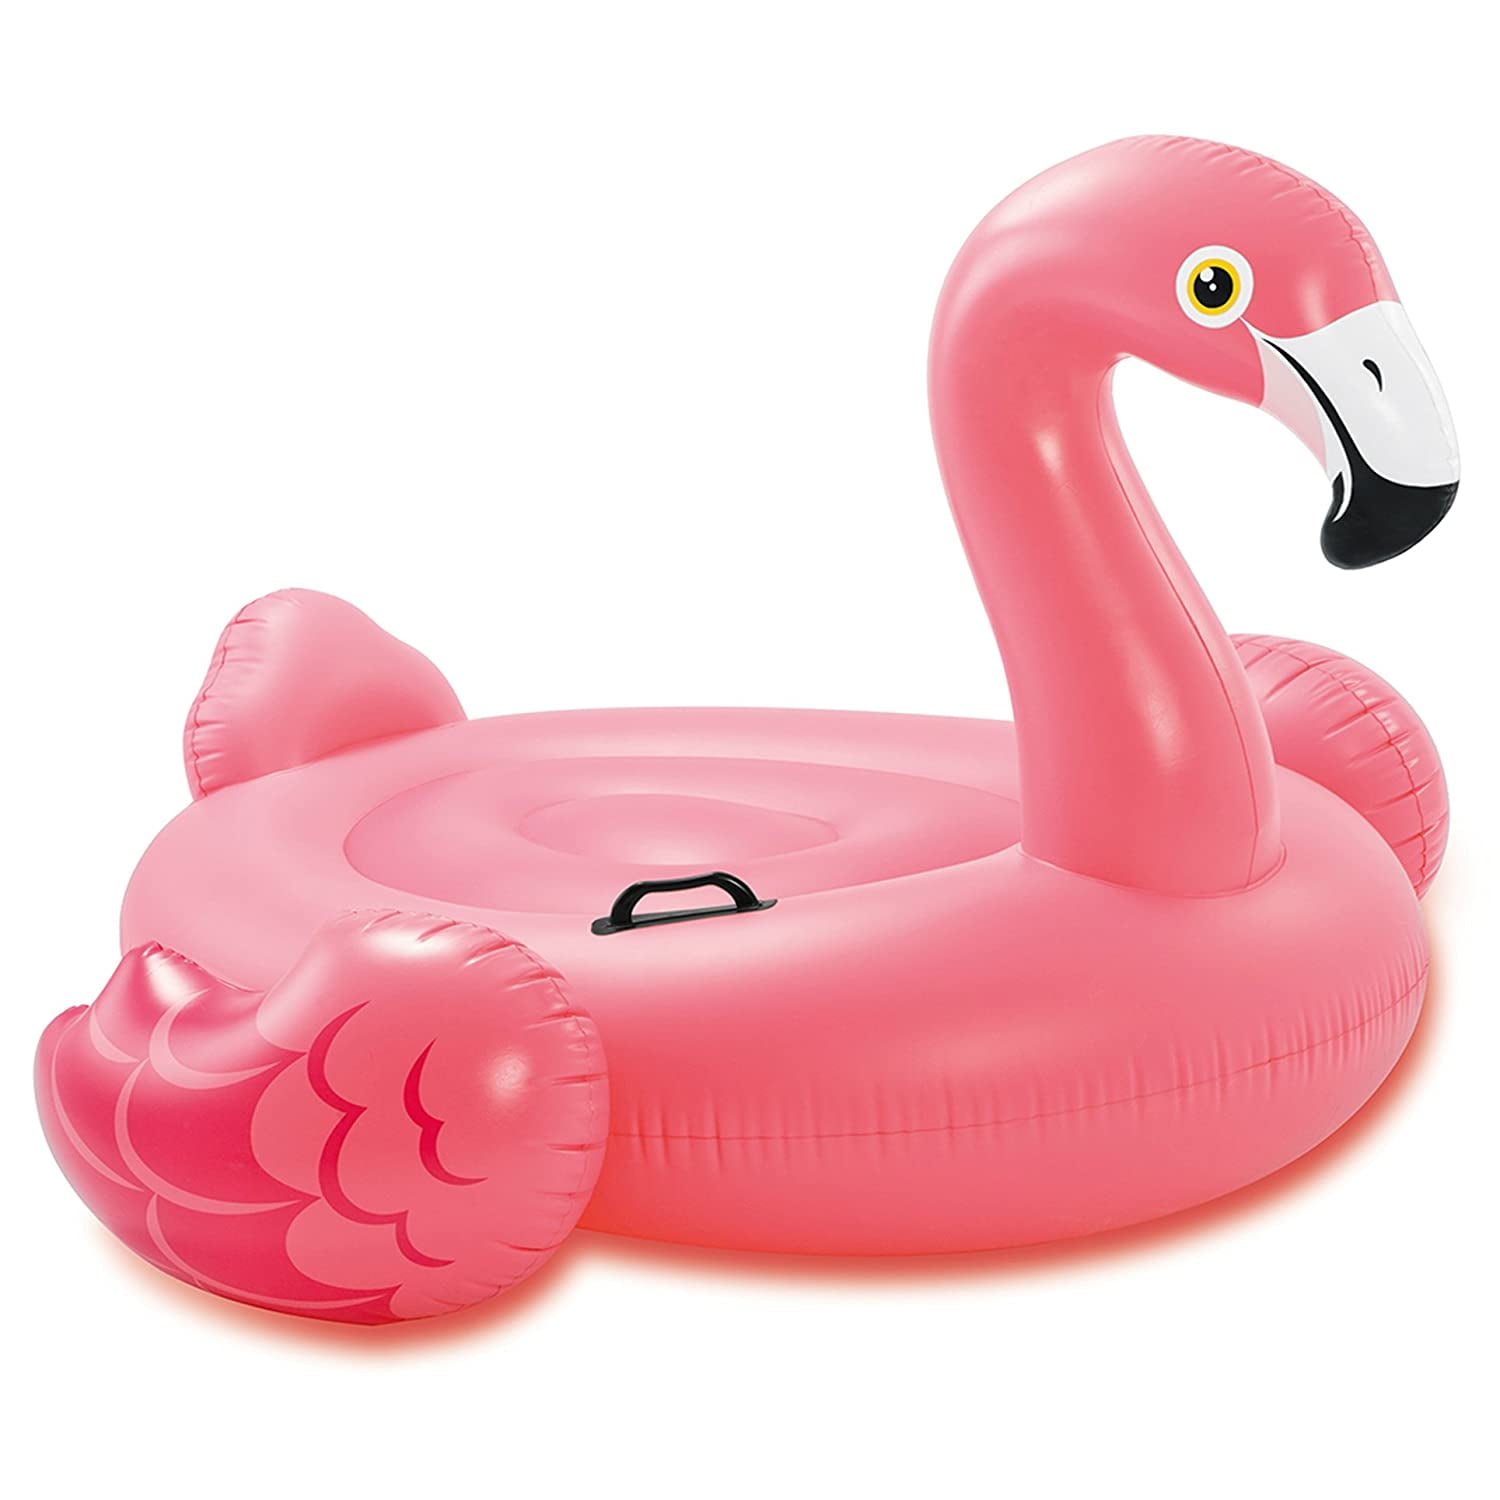 Wild n wet flamingo lounger Brand New 